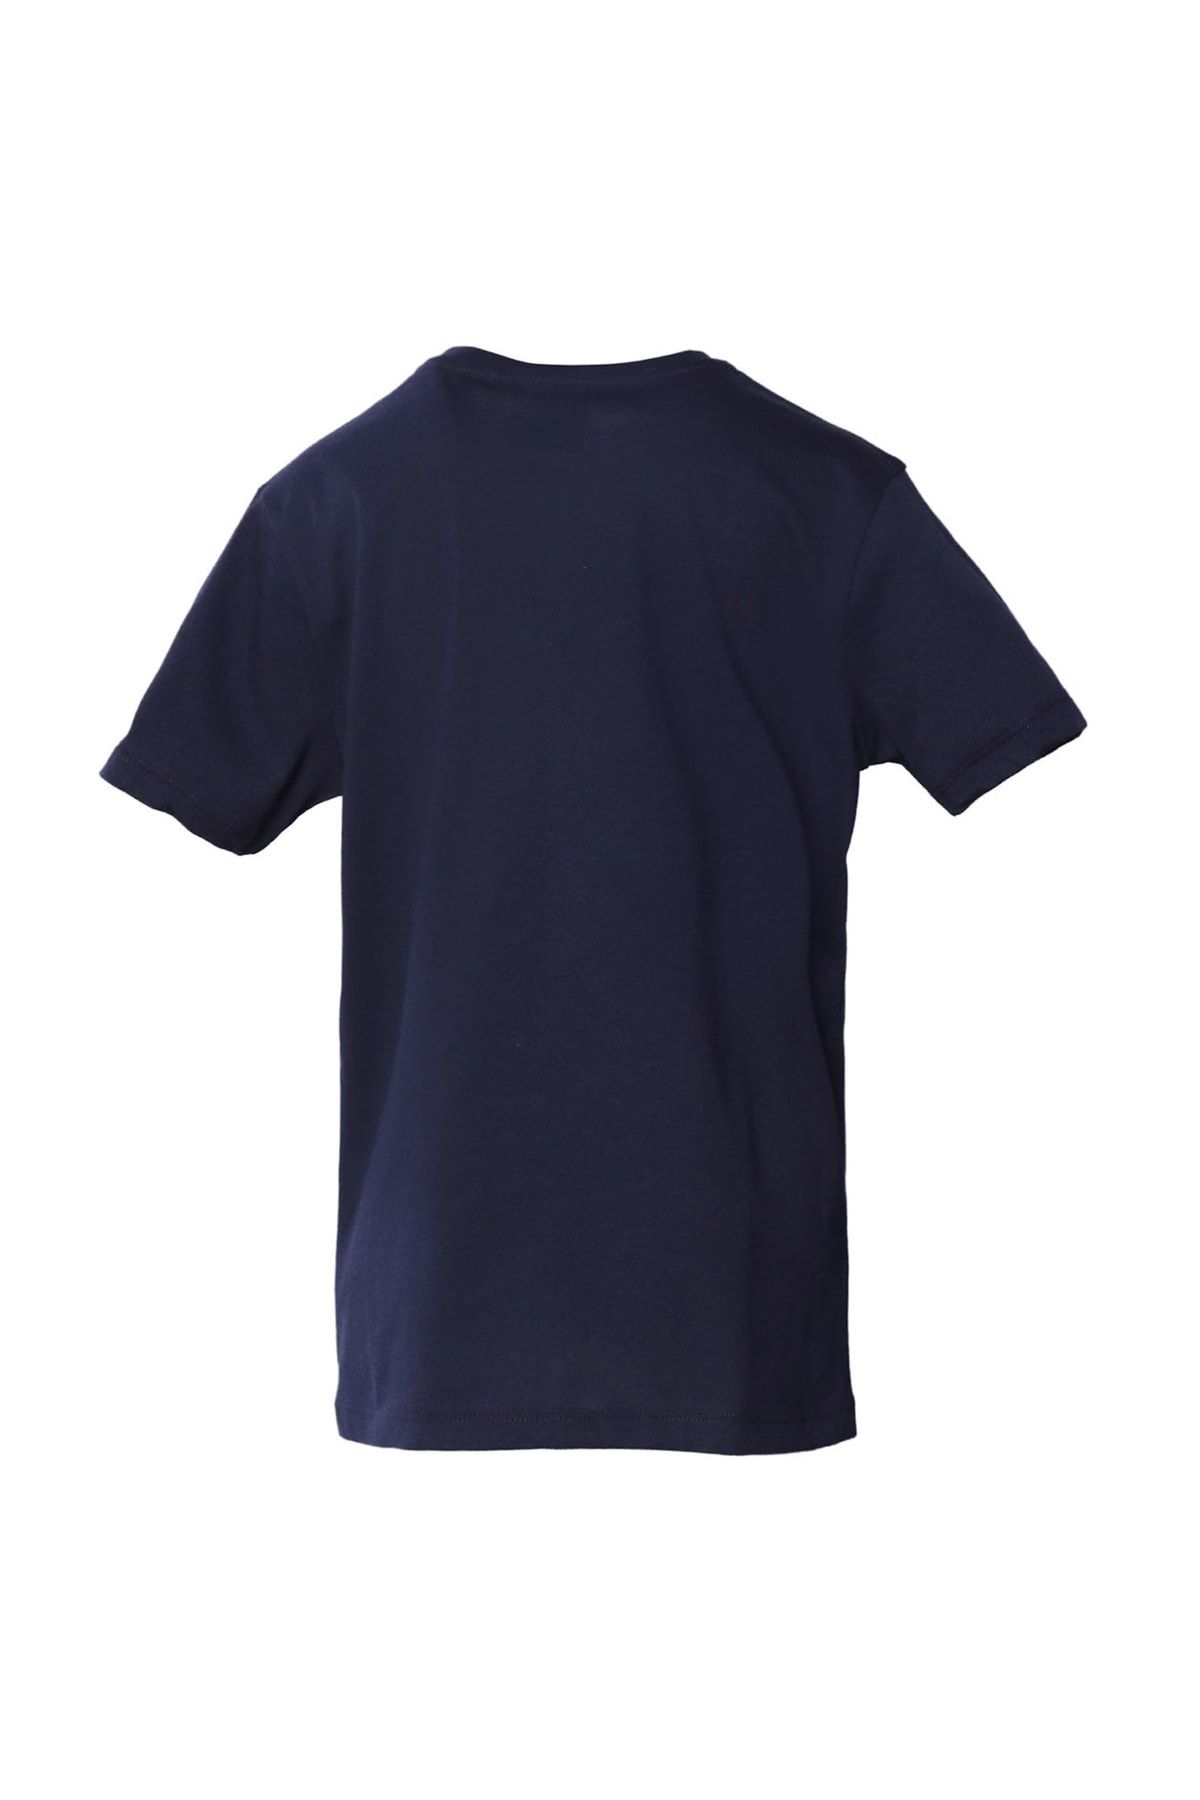 hummel تی شرت مرد آبی چاپی 911569-7480 HMLCOL S/S